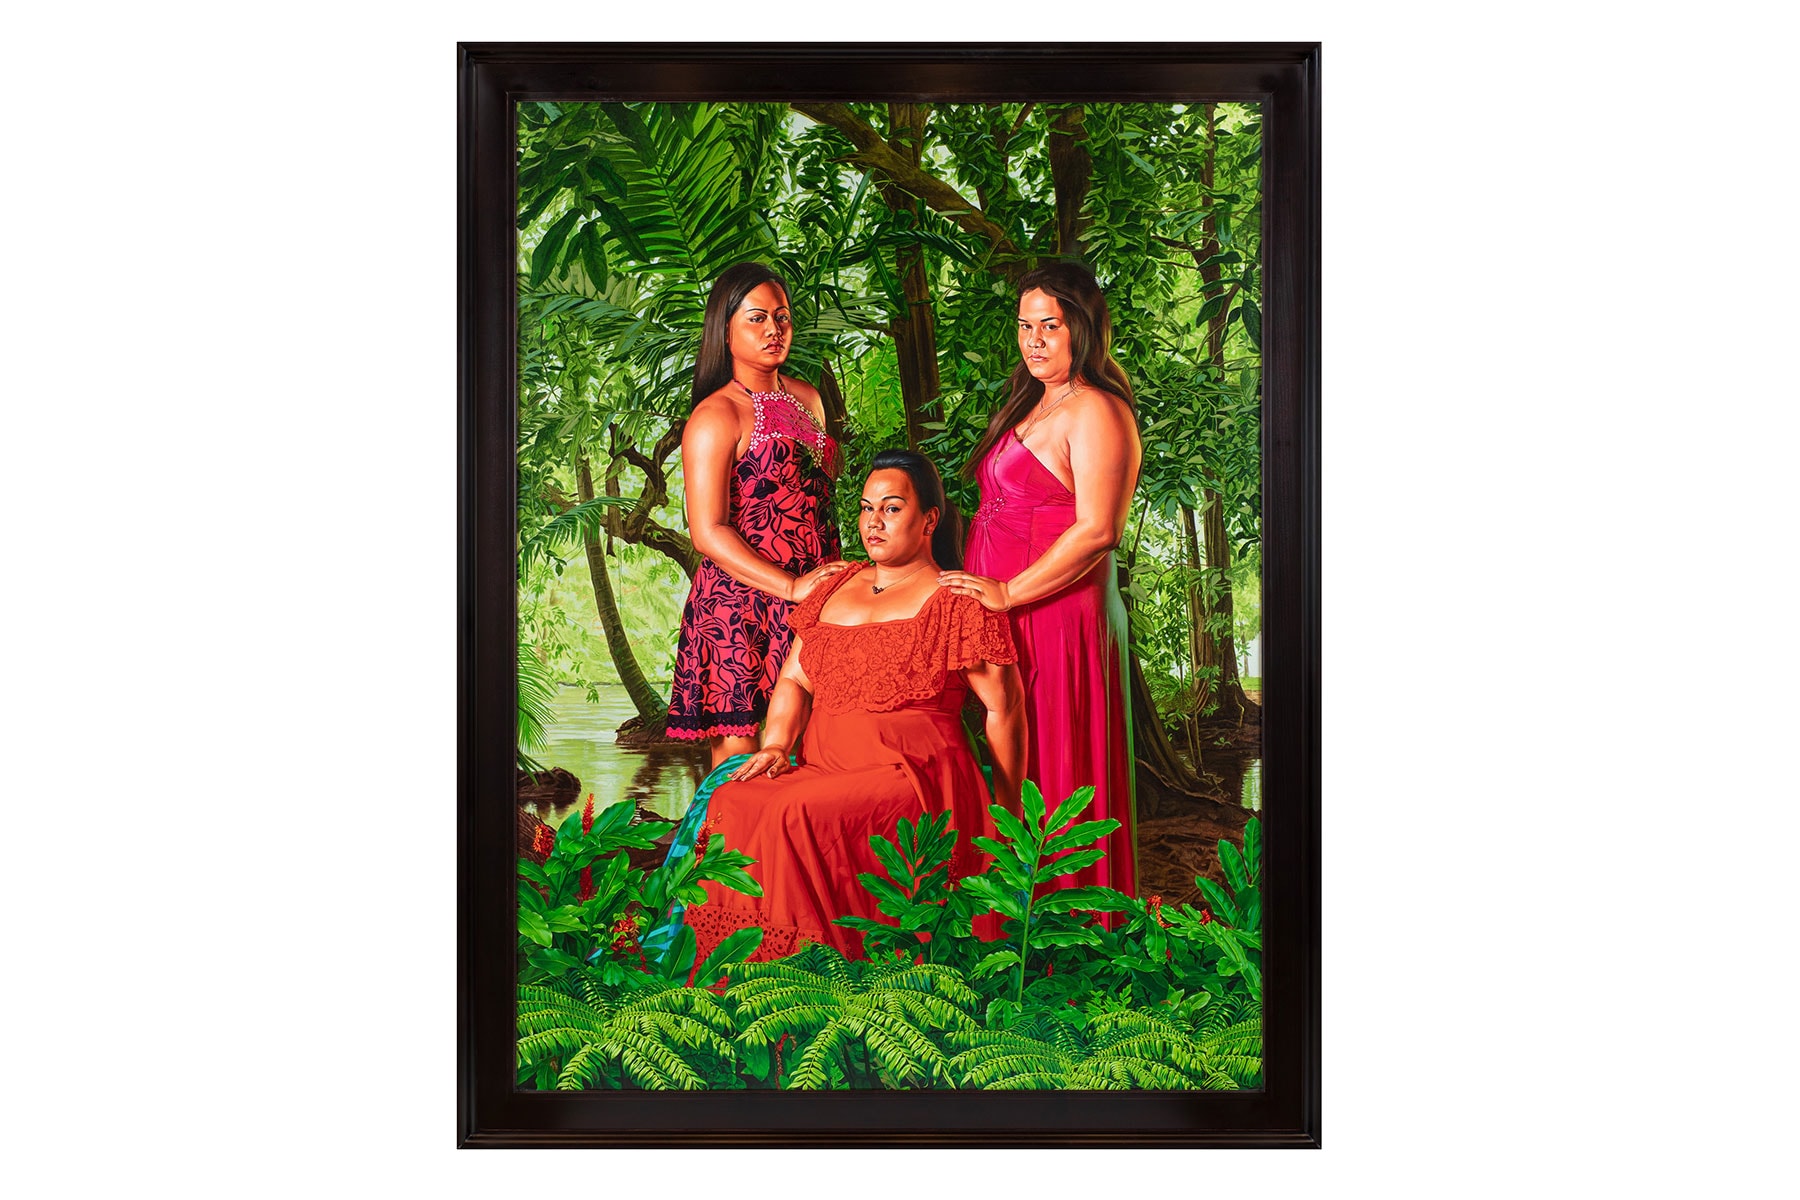 kehinde wiley tahiti galerie templon paris exhibition paintings portraits barack obama paul gauguin